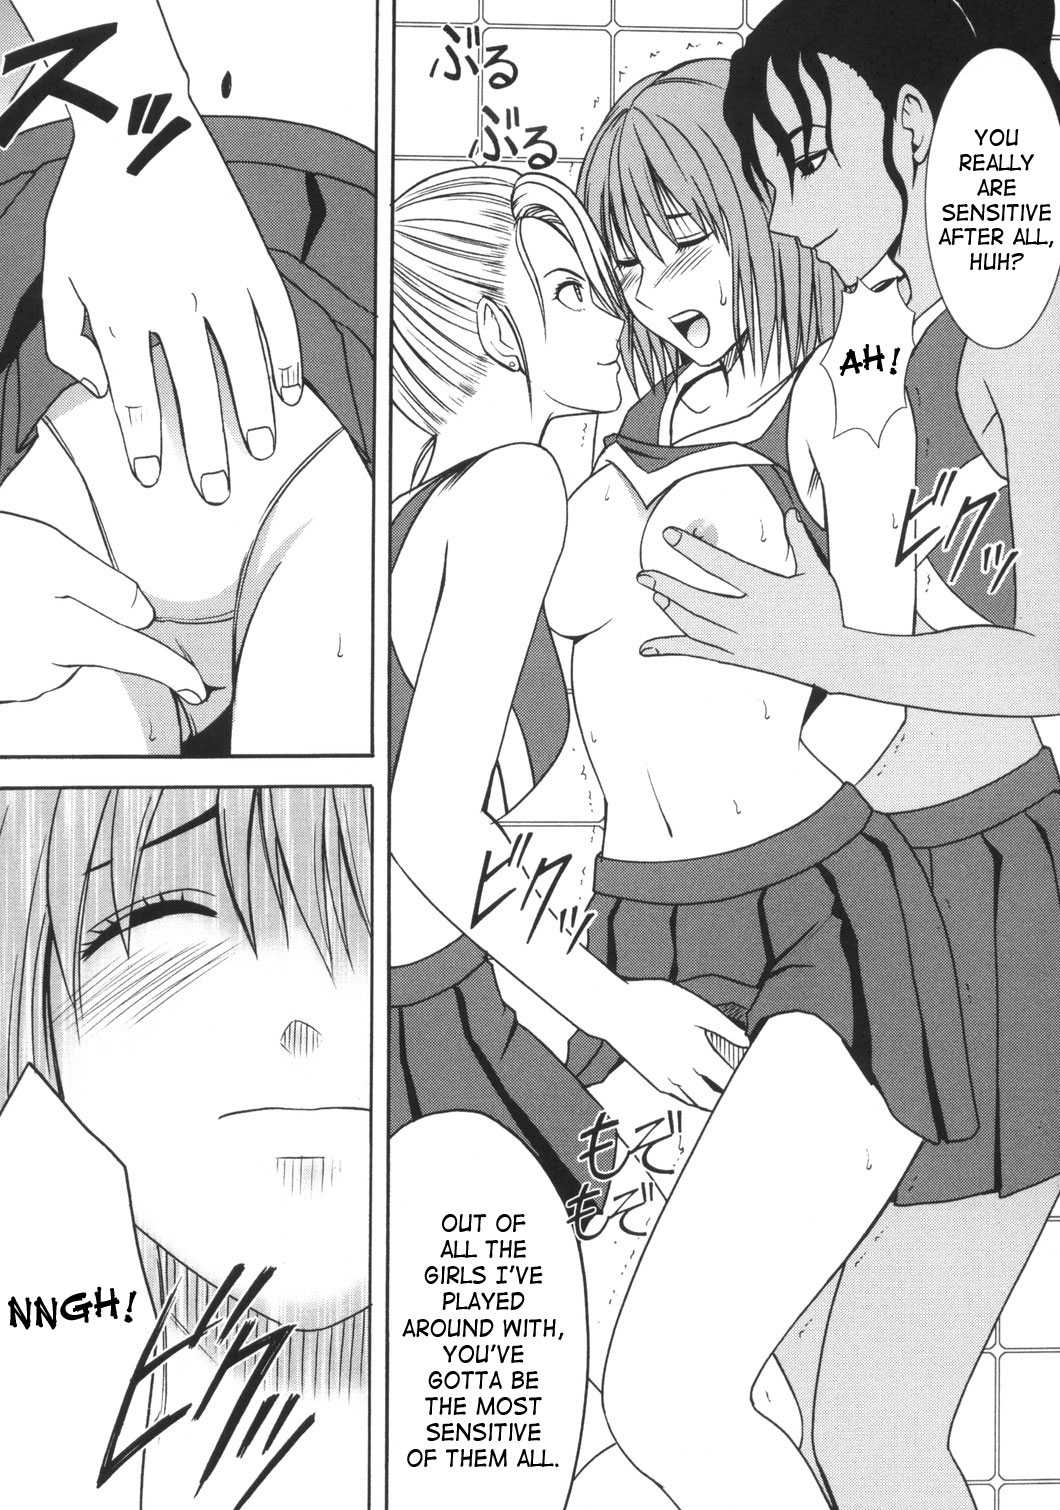 Erotic manga strip read free